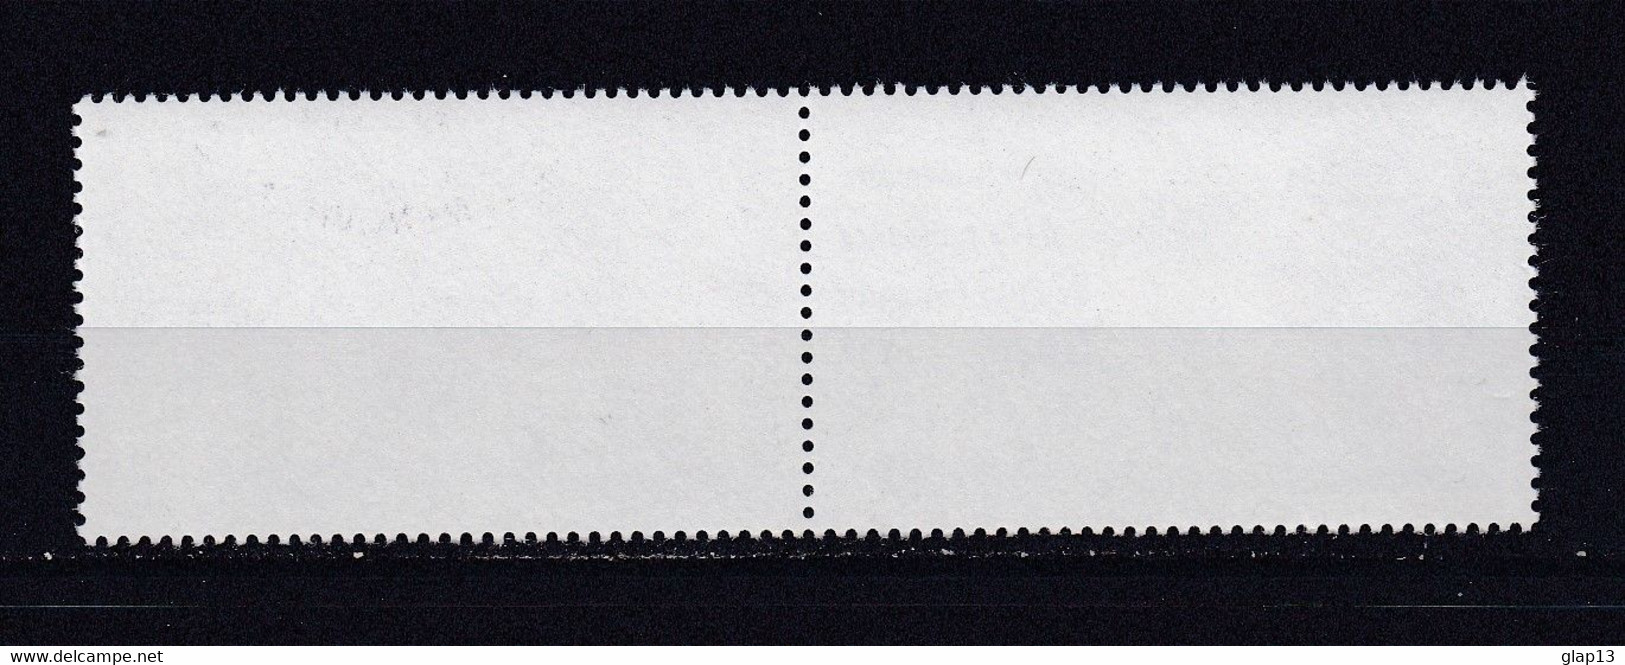 POLYNESIE 1998 TIMBRE N°564 OBLITERE TABLEAU DE GAUGUIN - Used Stamps